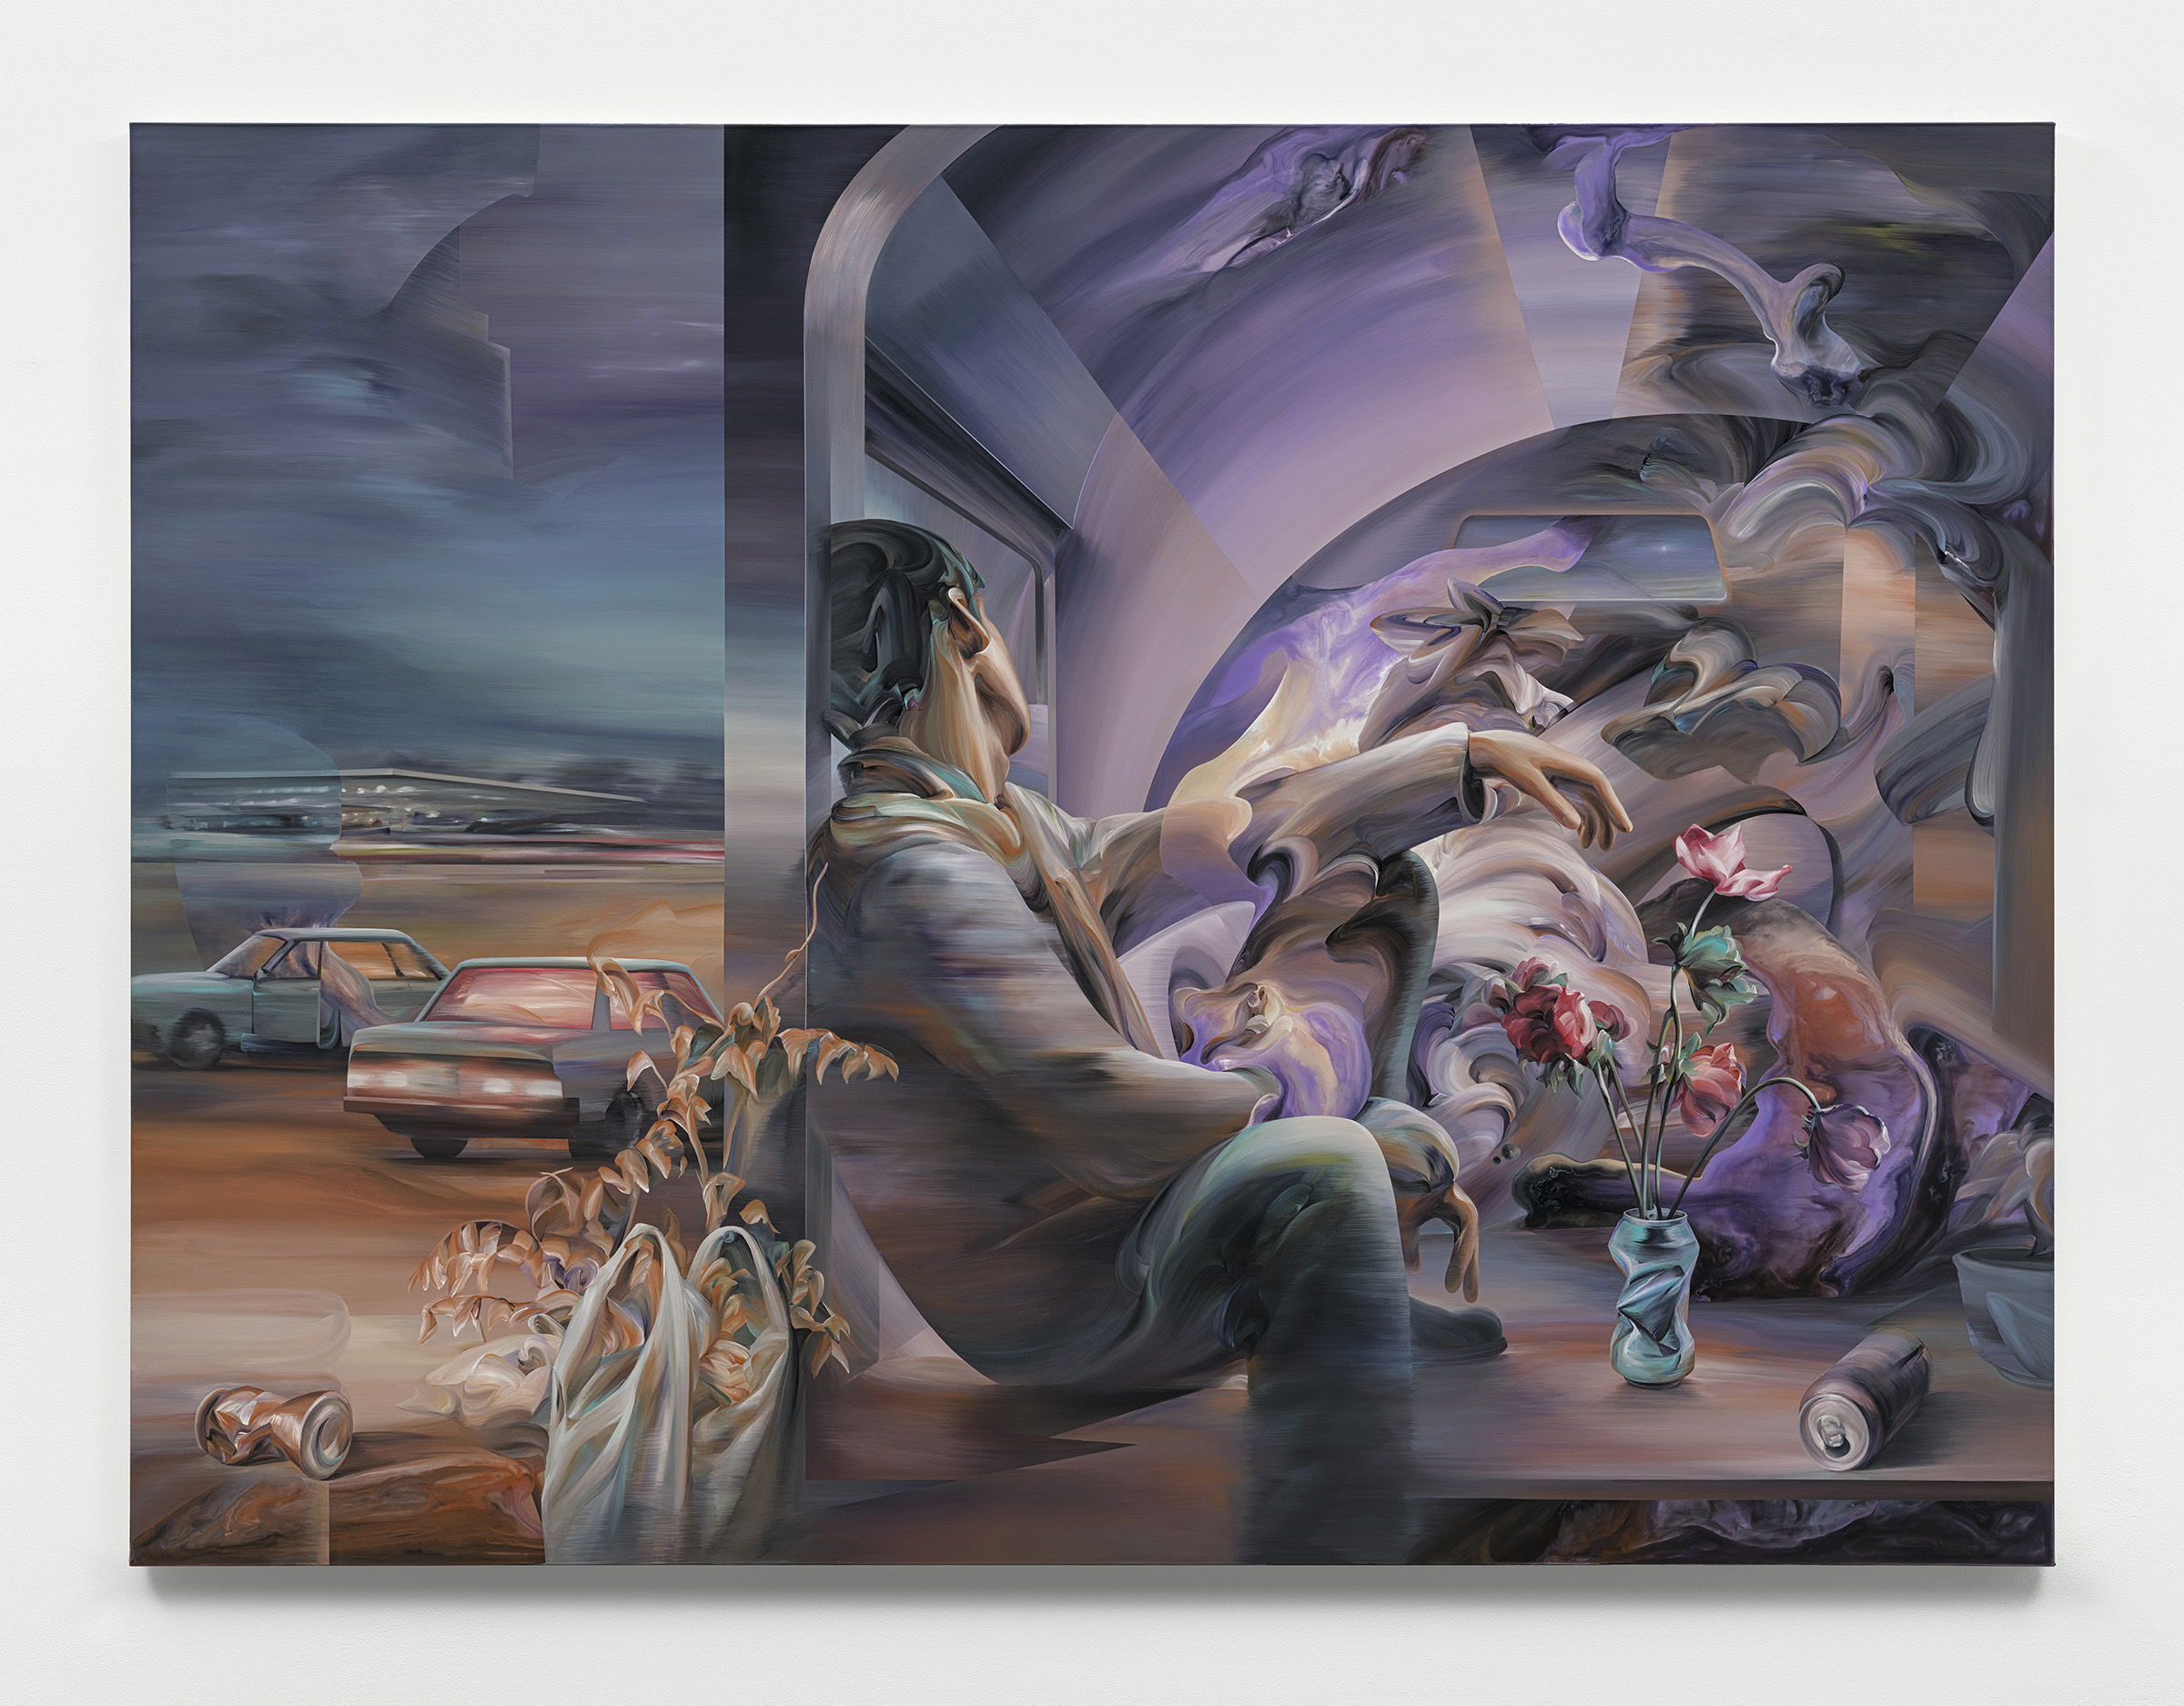 Huang Ko Wei, Nighthwak, 2023, acrylic on canvas, 135 x 180 cm, 53 1/8 x 70 7/8 in.